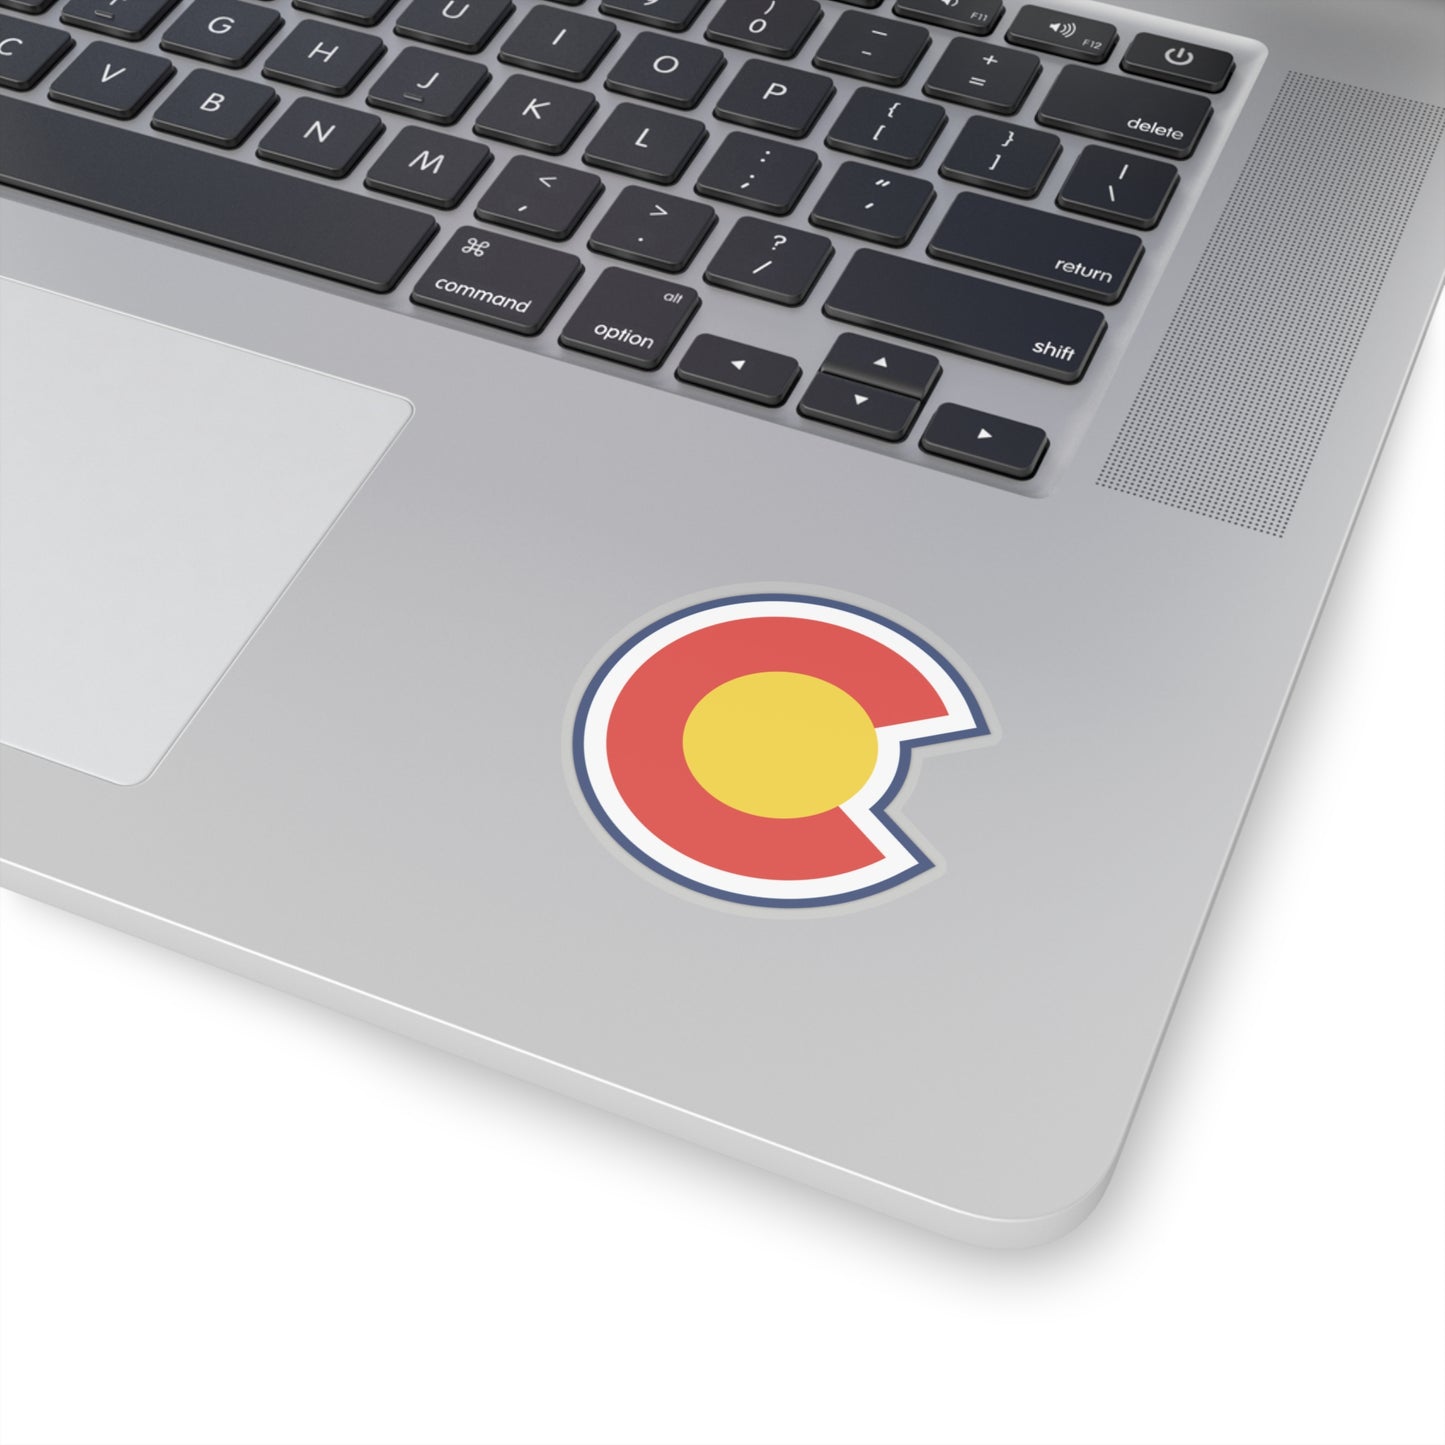 Colorado C Sticker